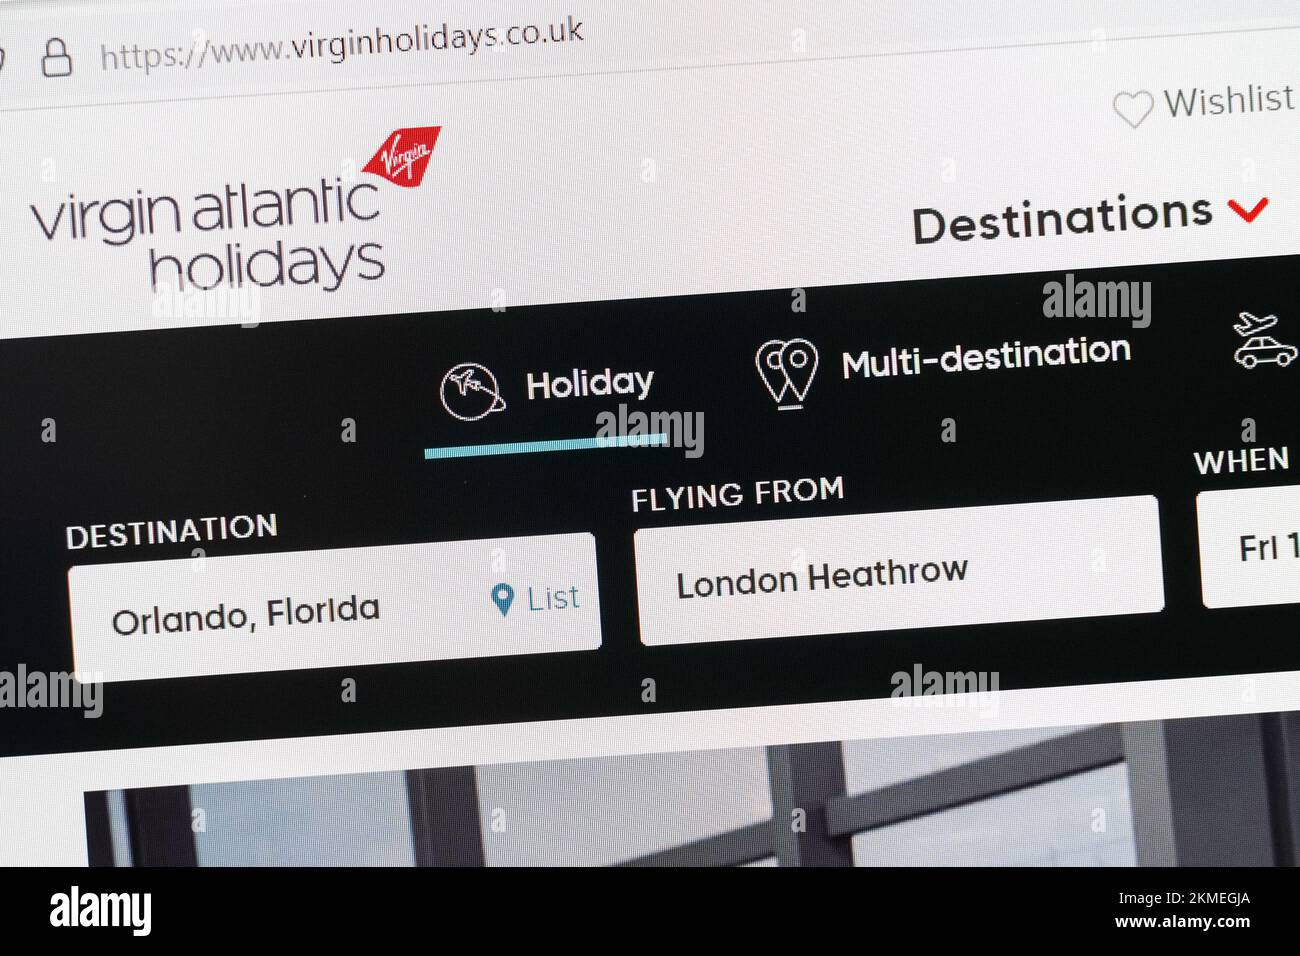 Sito Web Virgin Atlantic Holidays Foto Stock